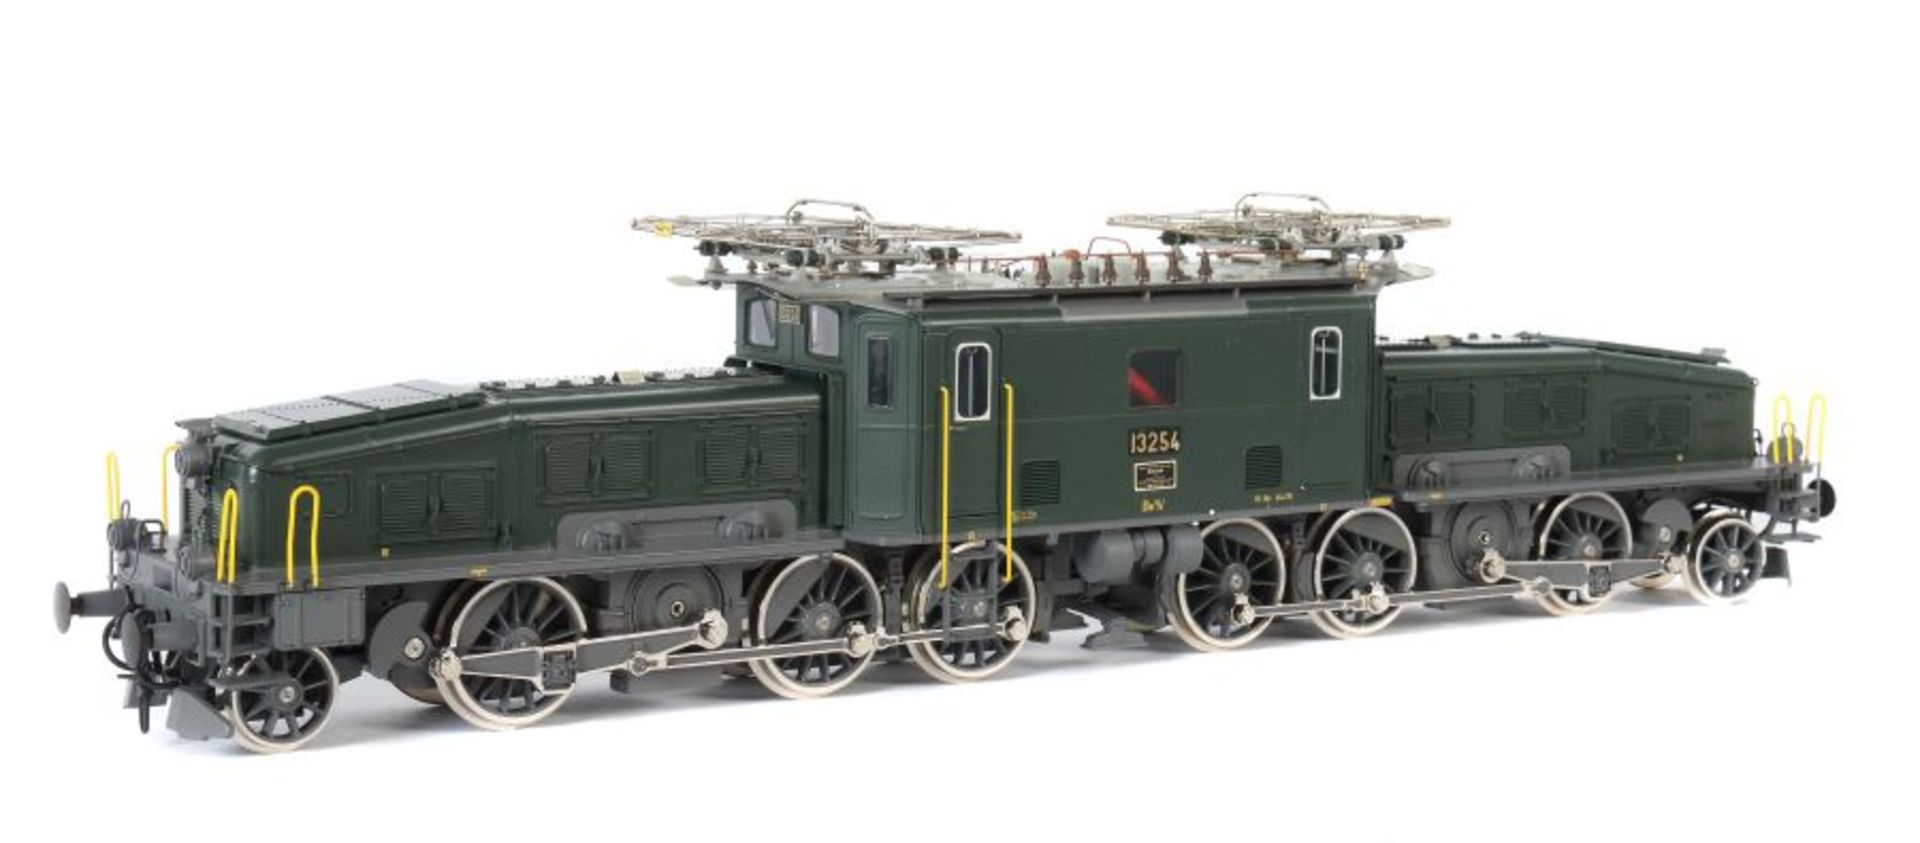 E-Lok "Krokodil" Märklin, Modellnr. 5556, Spur 1, Replika, 6-/8-achsige Lokomotive in dunkelgrüner